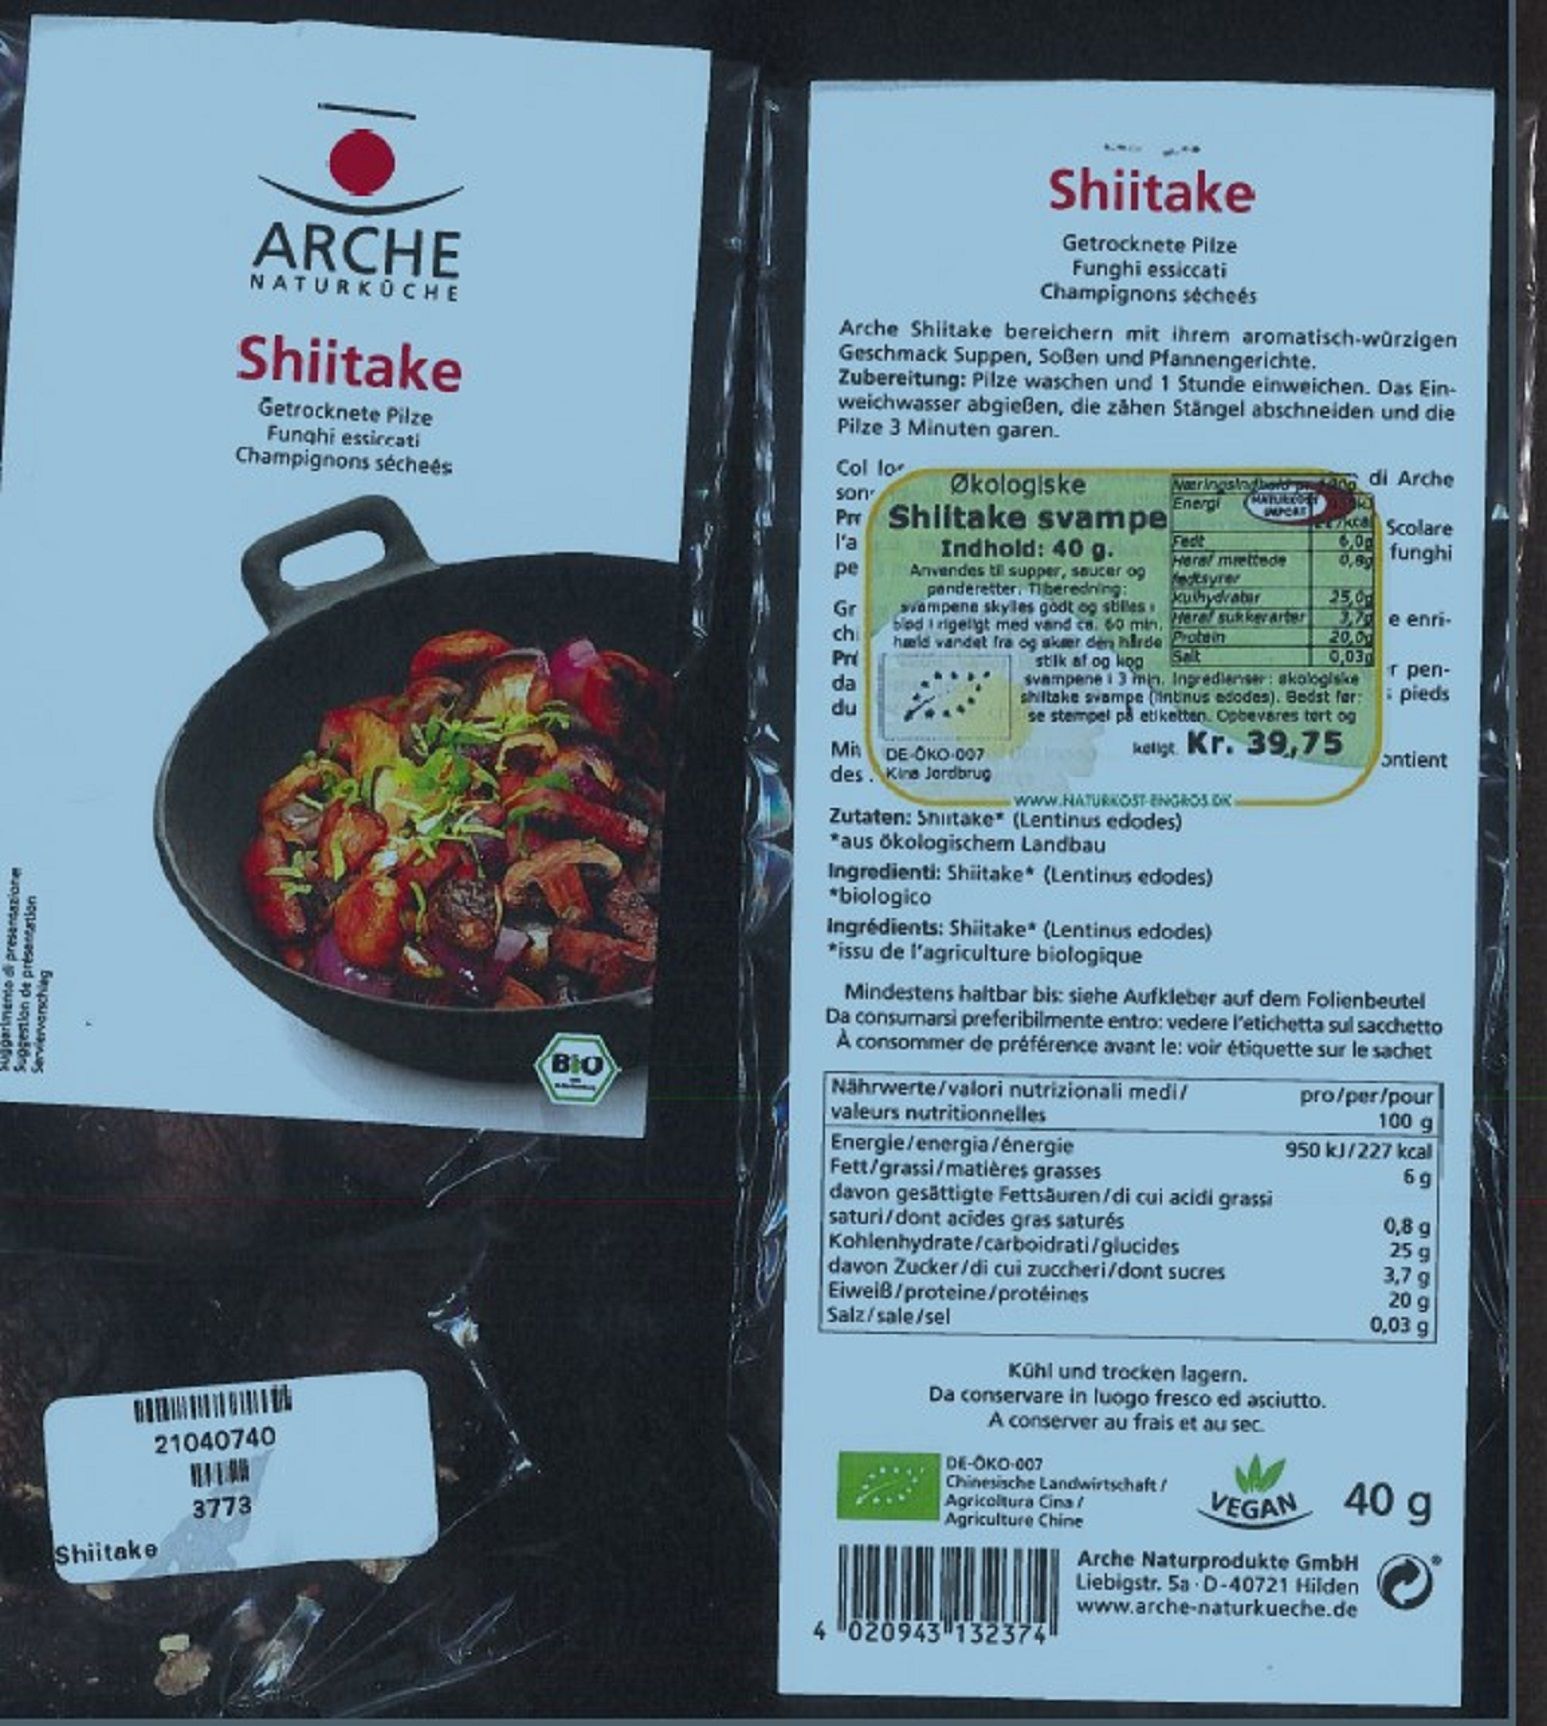 Etiqueta de las setas shiitake afectadas / Aesan